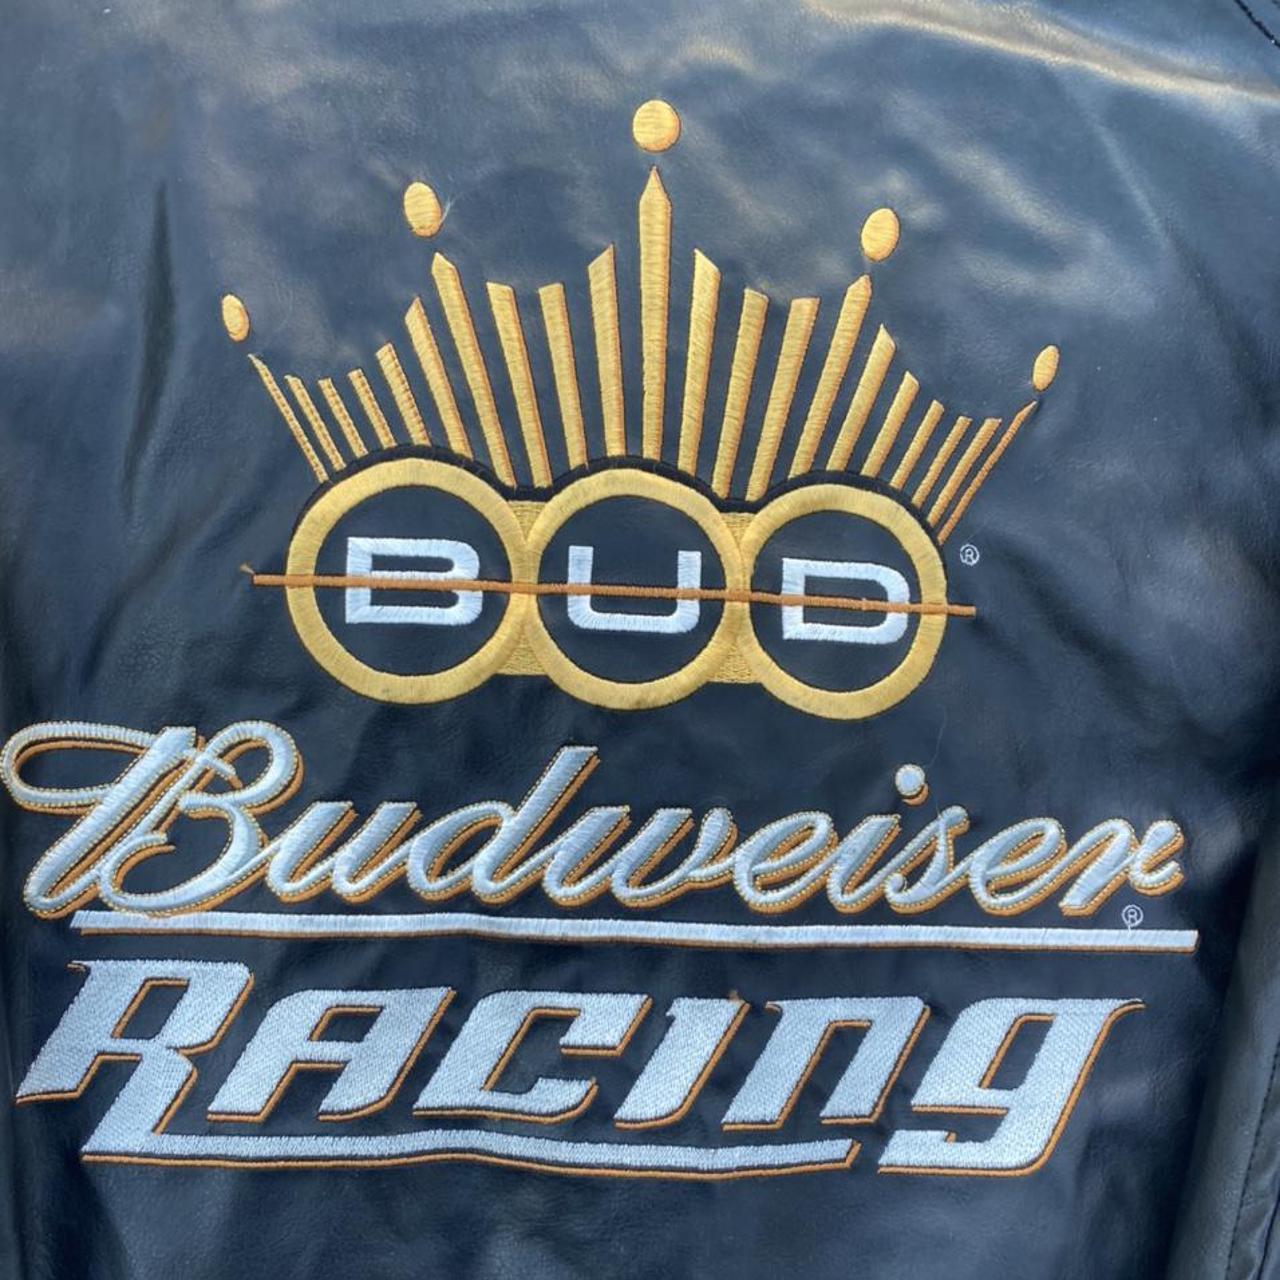 Product Image 2 - Budweiser racing jacket. Brand new